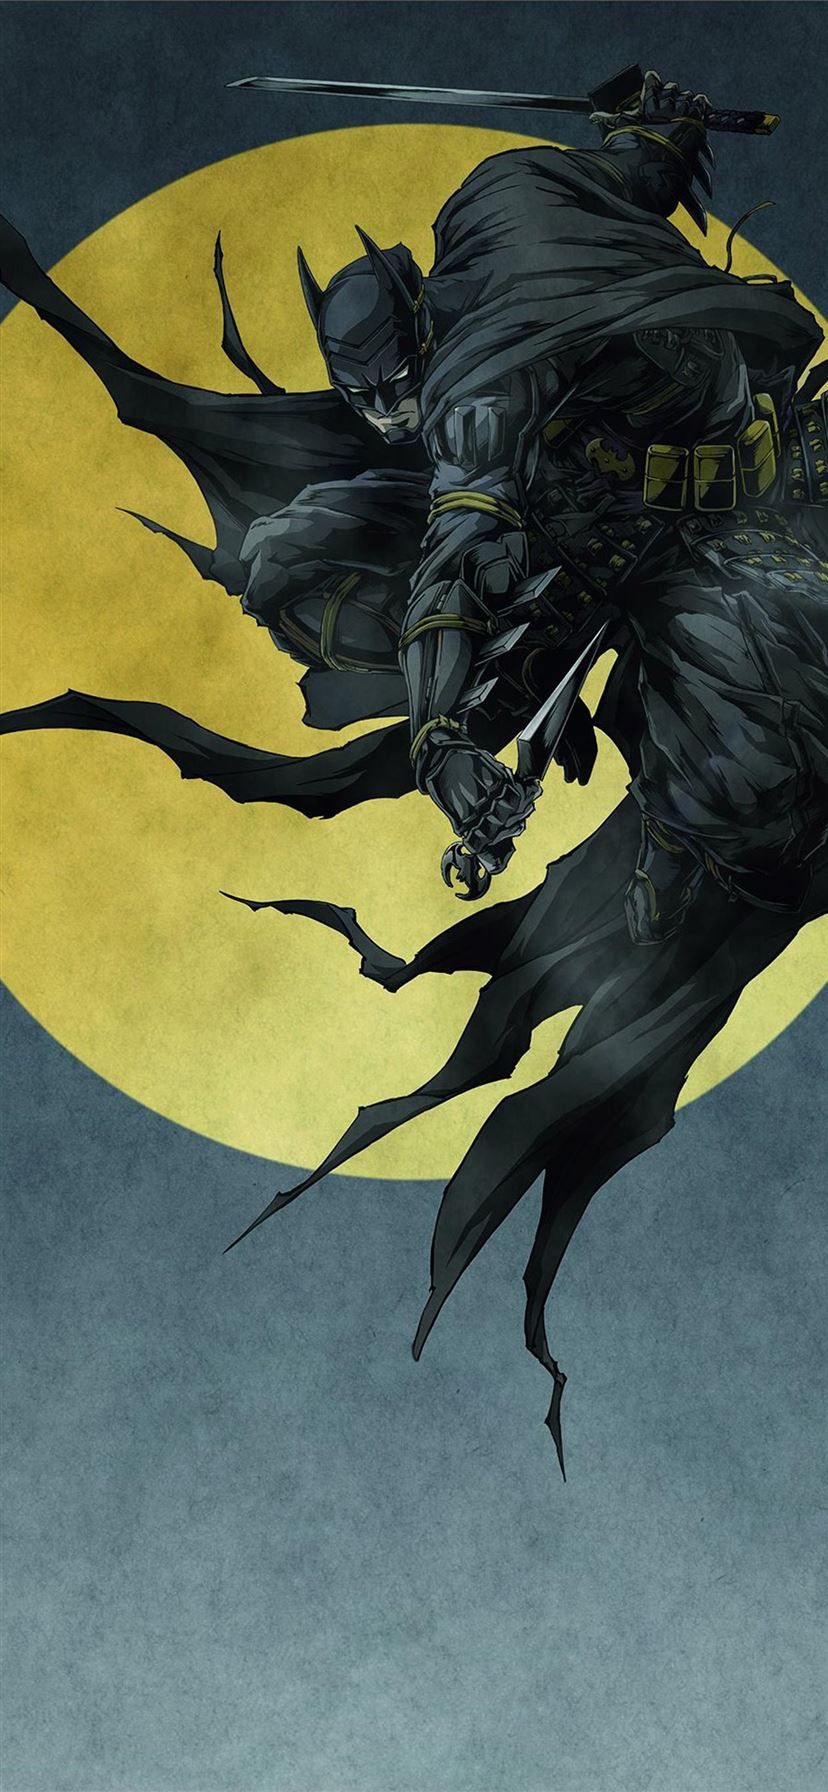 Batman Ninja on afari iPhone 11 Wallpaper Free Download